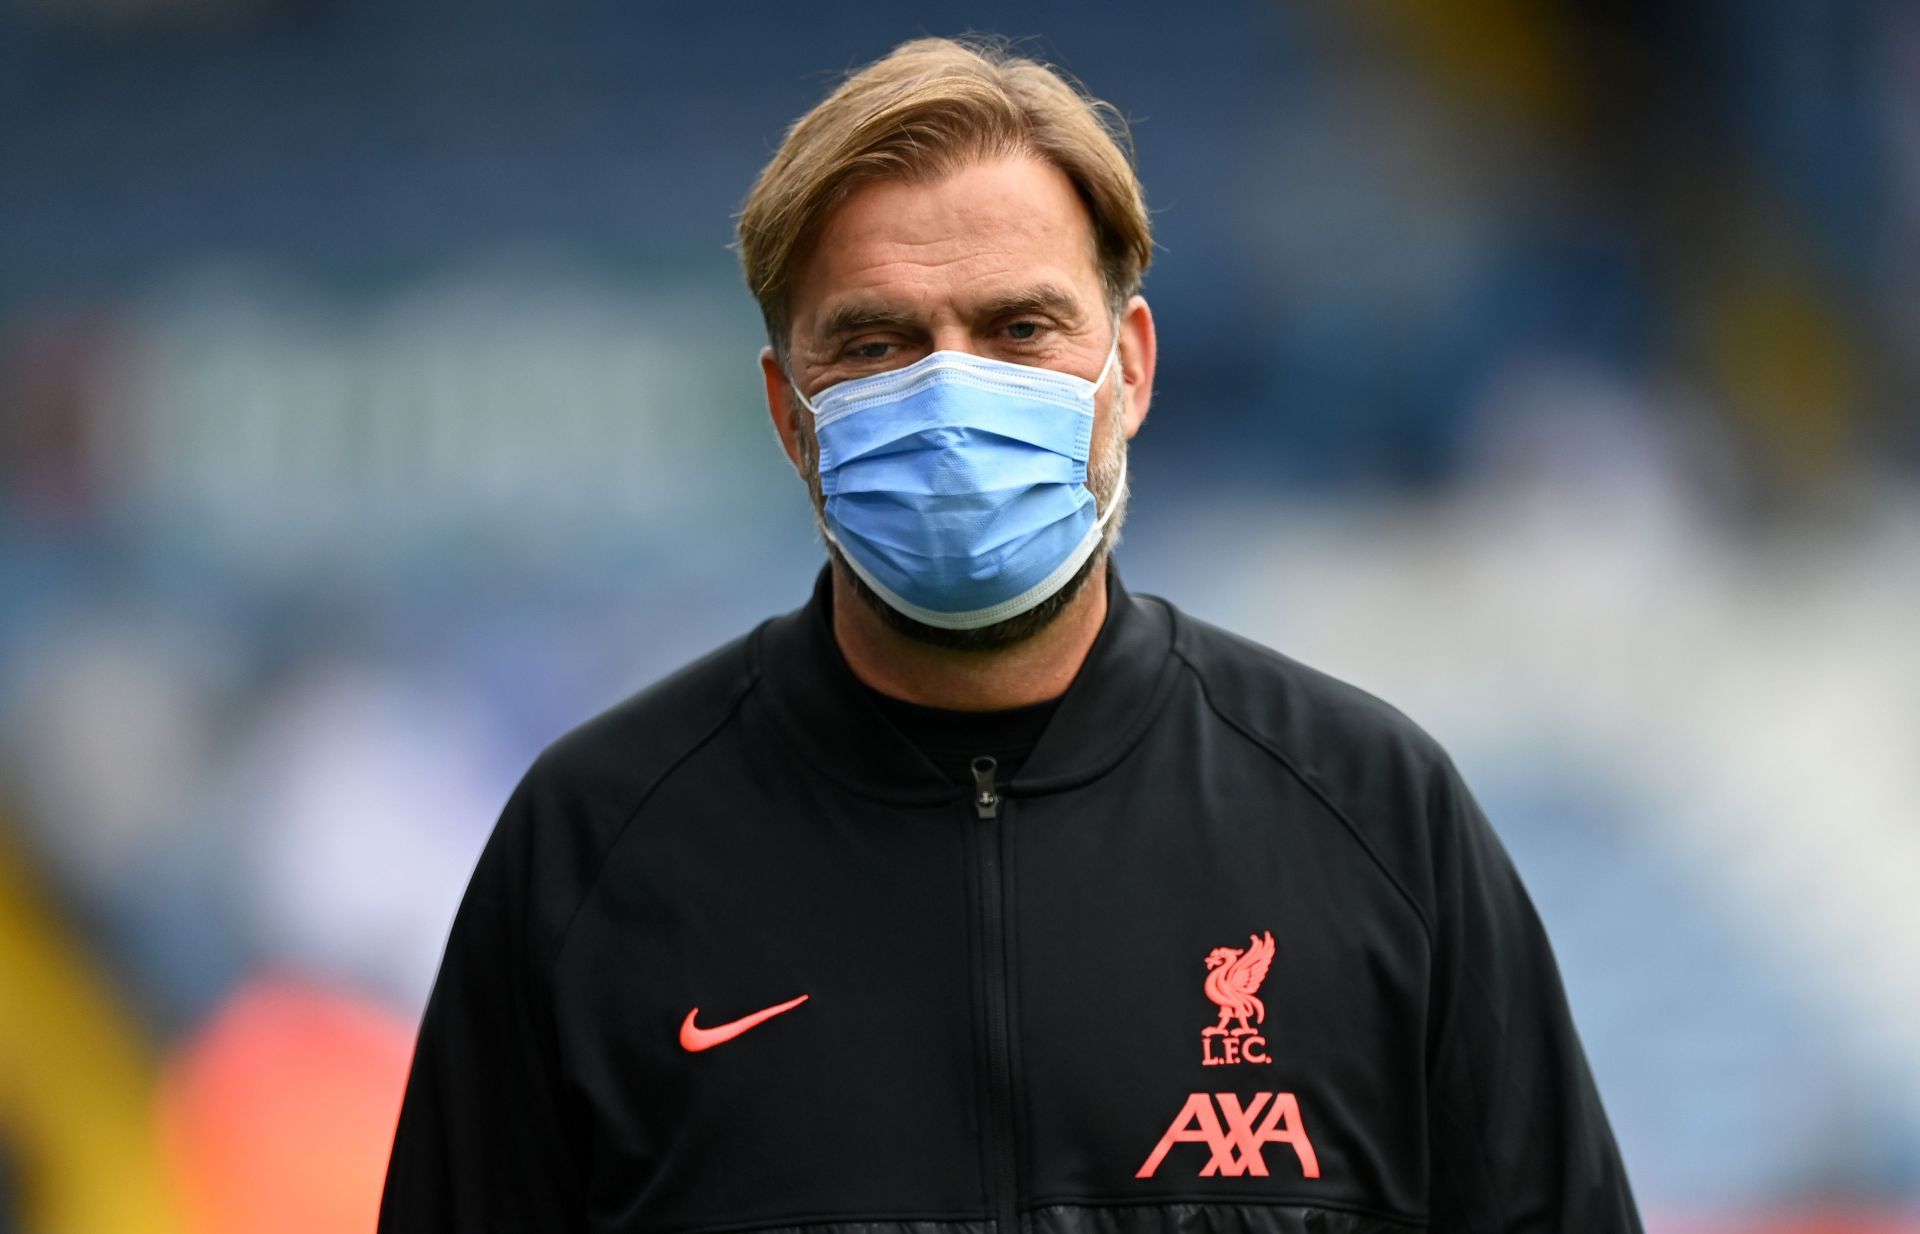 Liverpool manager Jurgen Klopp. (Photo by Shaun Botterill/Getty Images)